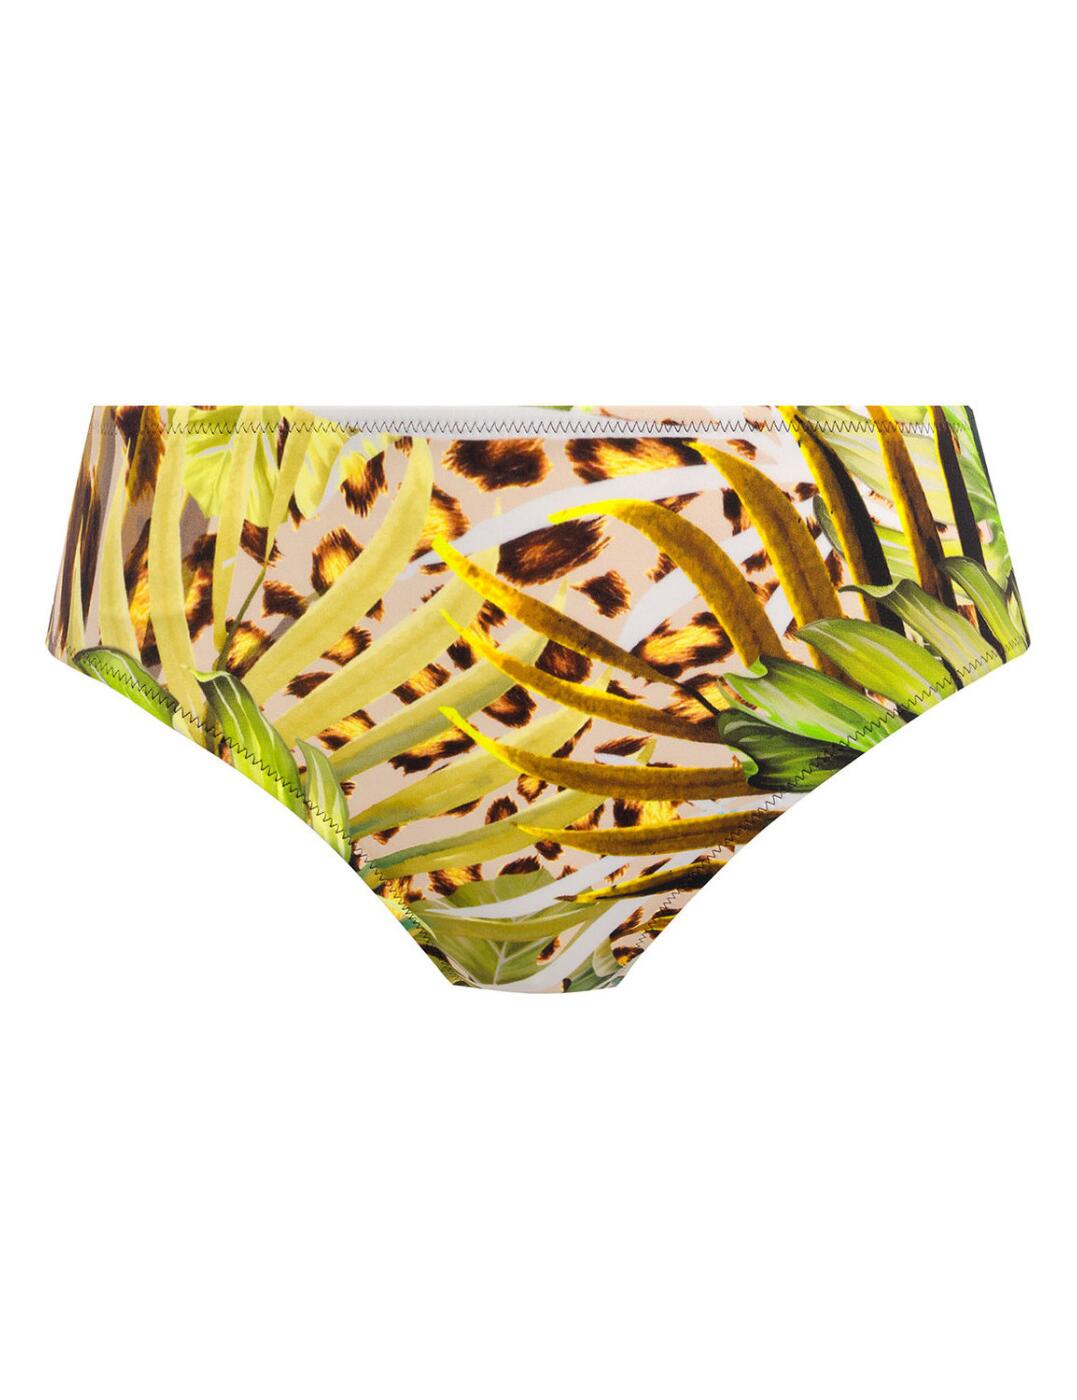 Fantasie Kabini Oasis Mid Rise Bikini Brief Bottoms Swimwear Briefs 502172  Multi